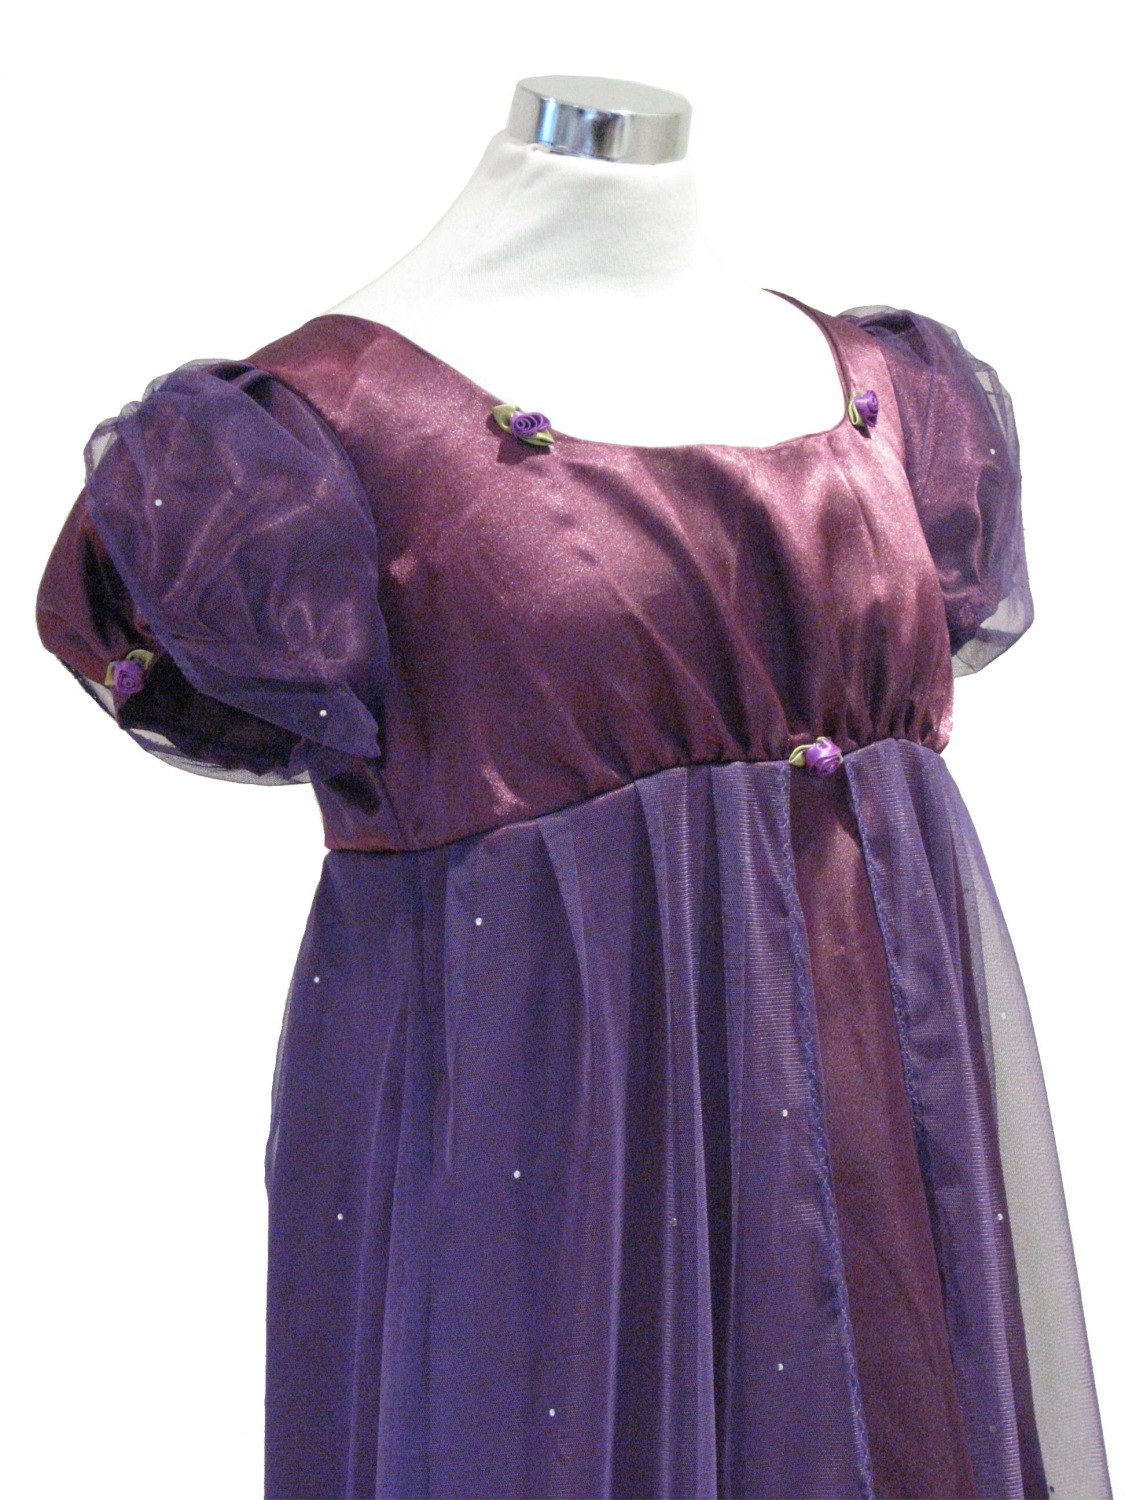 Ladies 19th Century Jane Austen Regency Evening Ball Gown size 12 - 14 Image